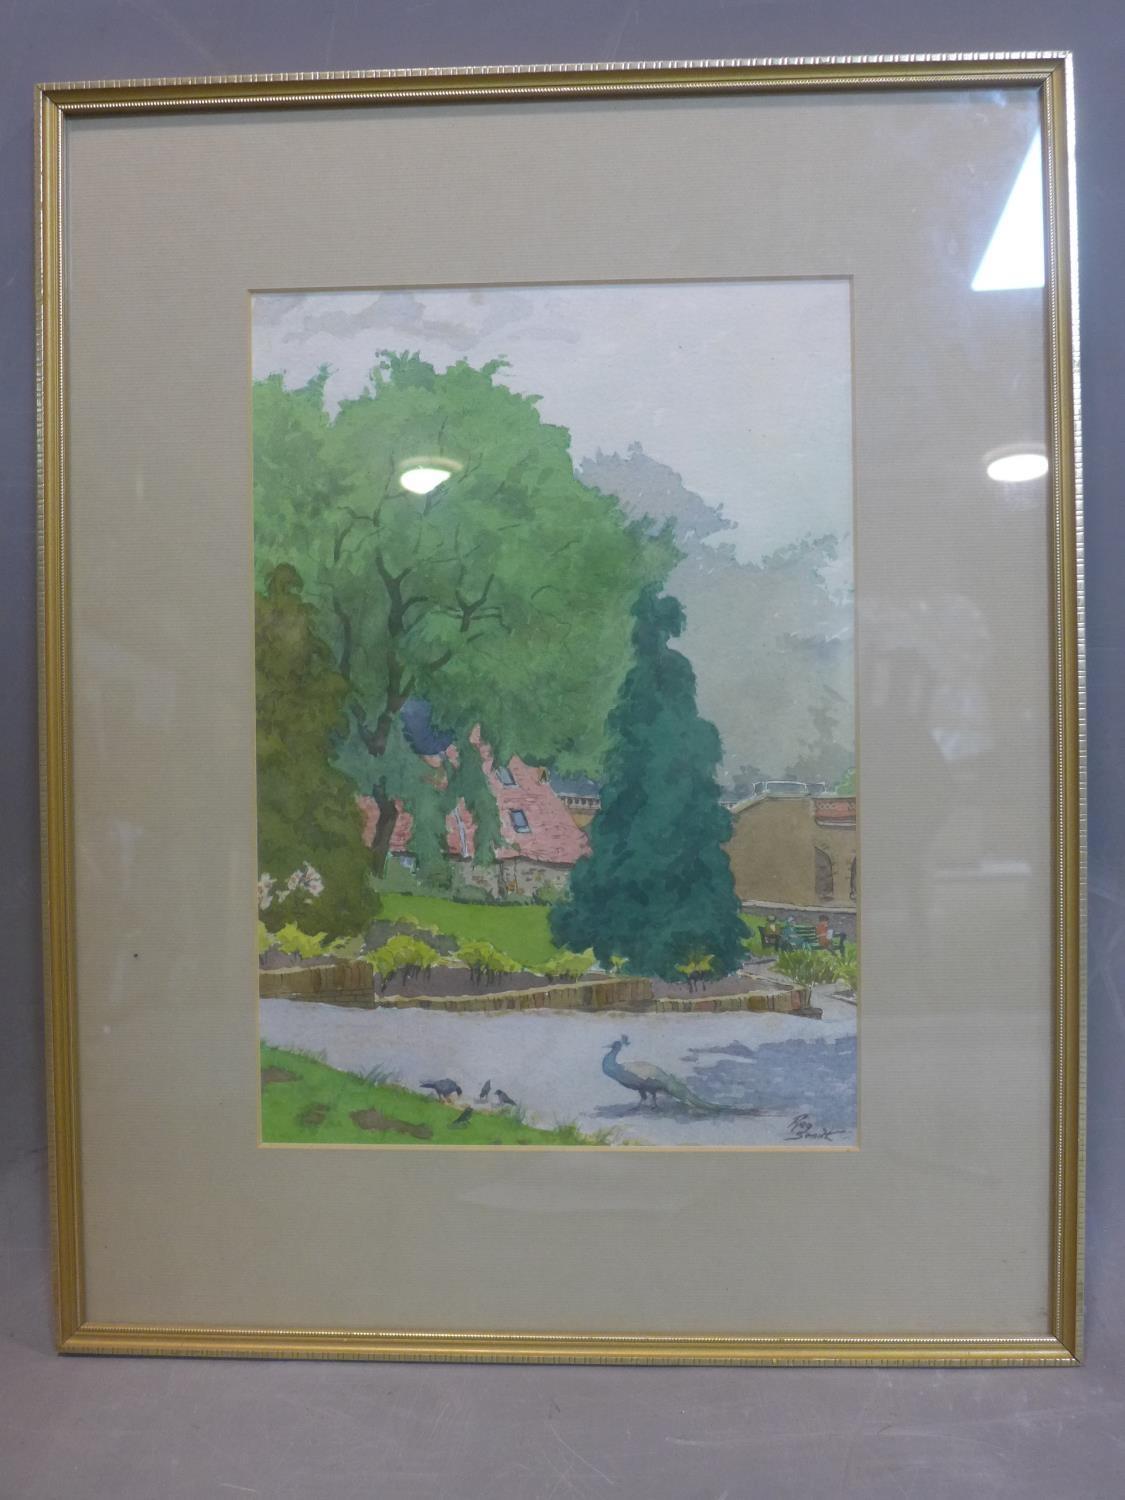 Reginald Smith (1870-1925), 'The ice house Holland park', signed, framed and glazed, 50 x 40 cm